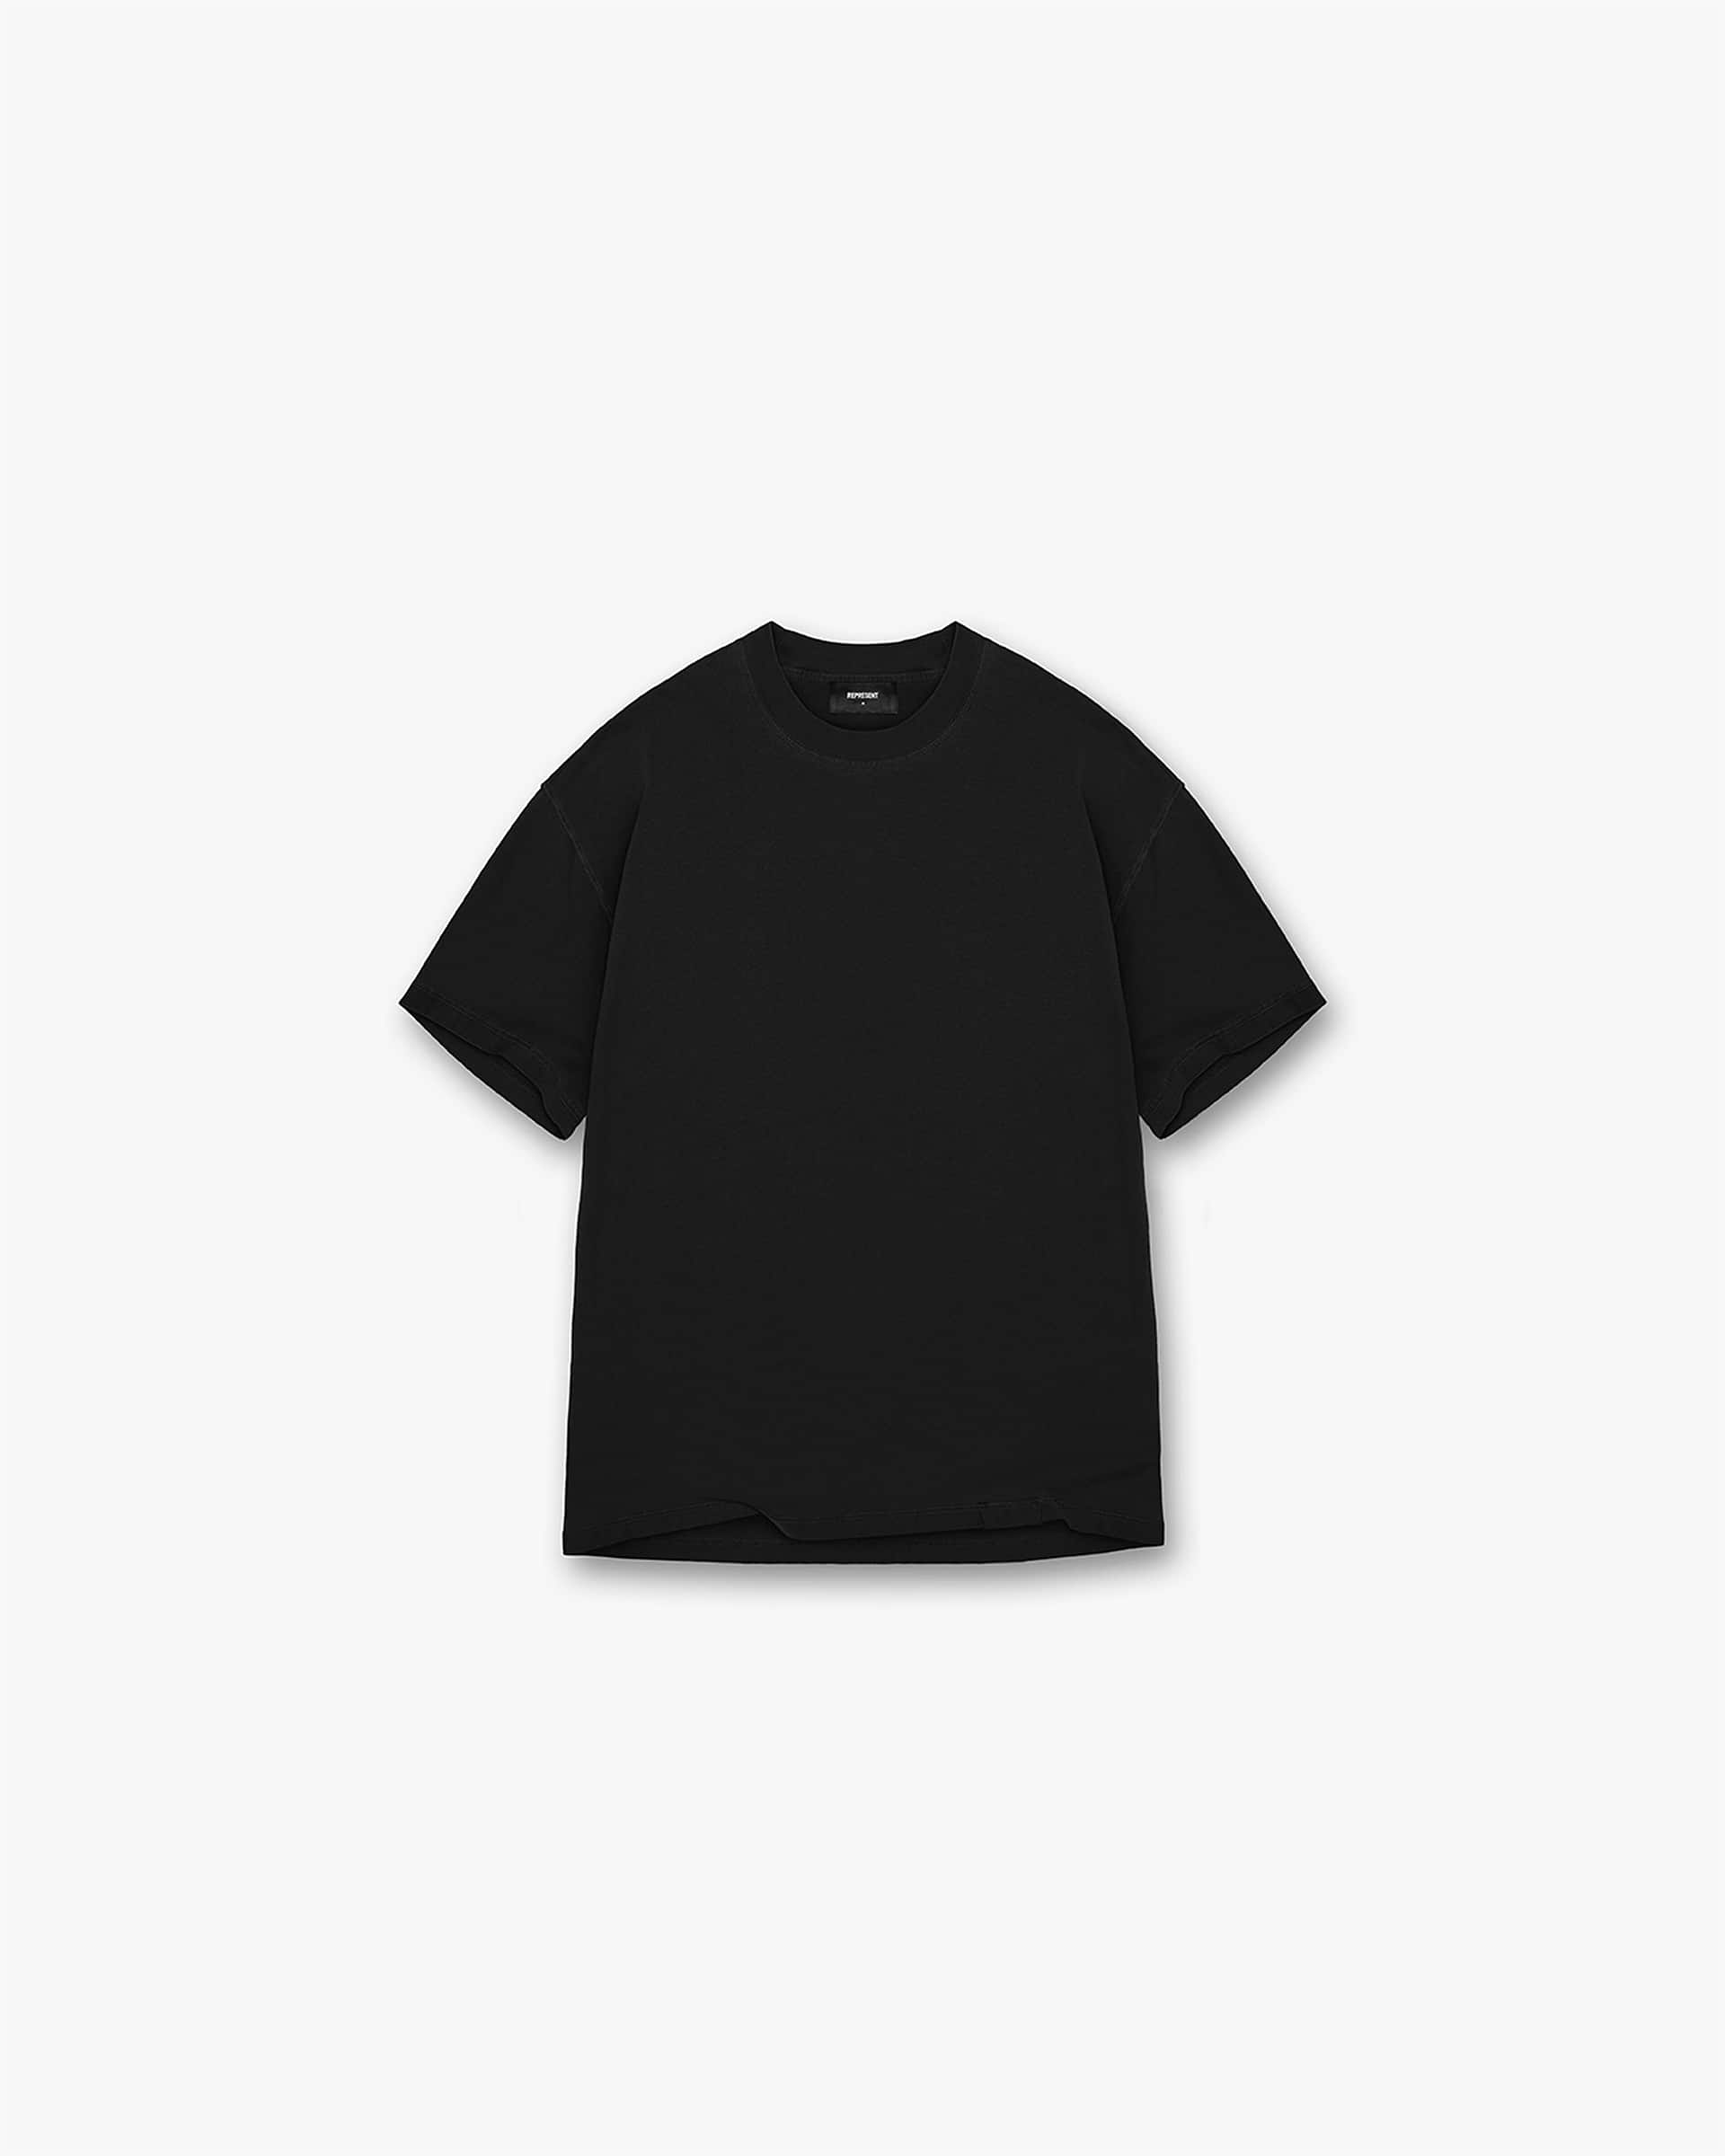 American Vintage Men's T-Shirt - Black - M